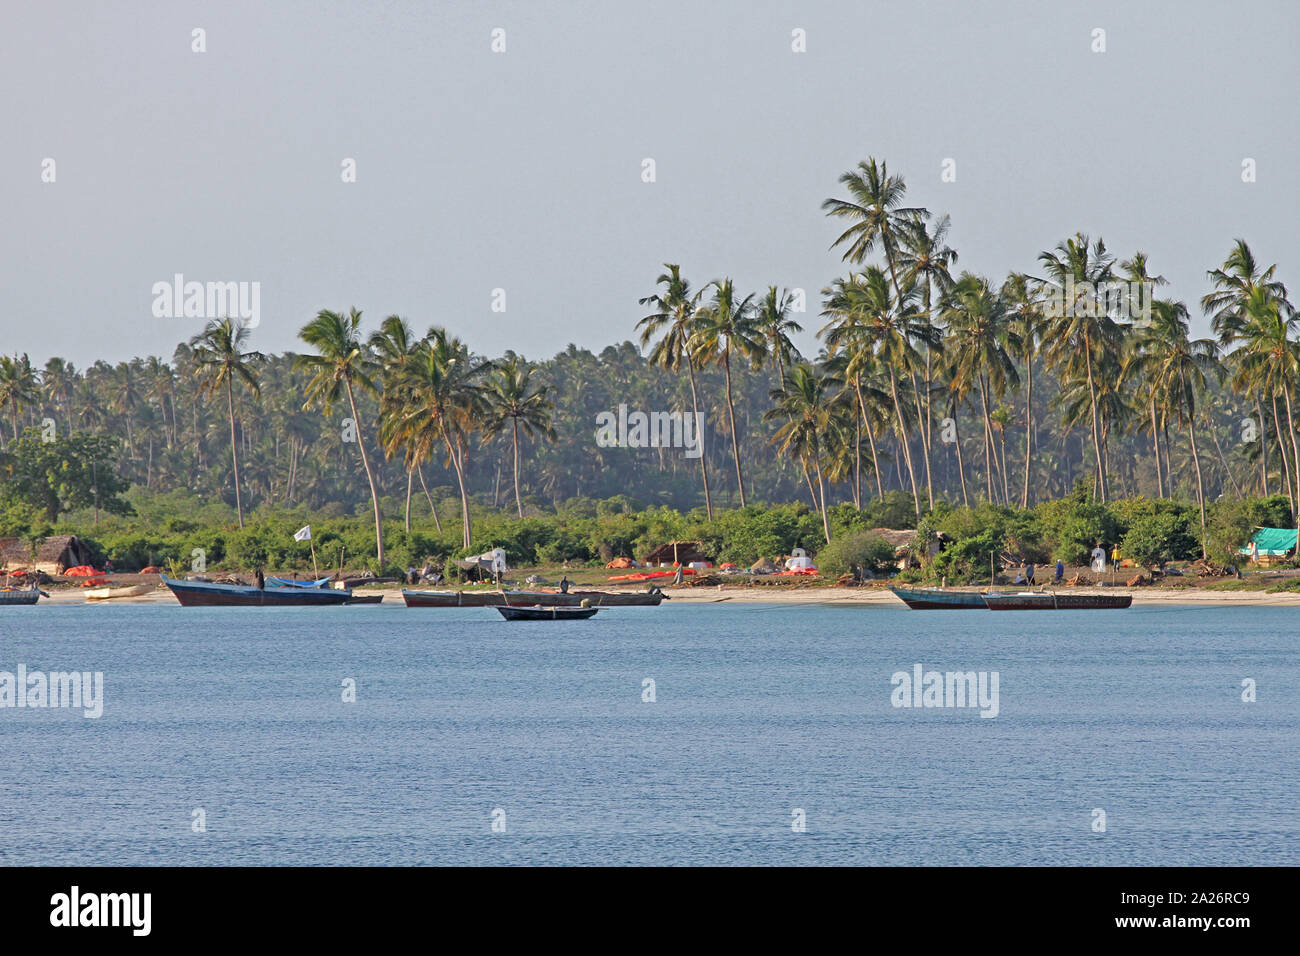 Fishermen's village on the beach with fishing boats and palm trees along the Eastern Coast of Zanzibar, Unguja Island, Tanzania. Stock Photo